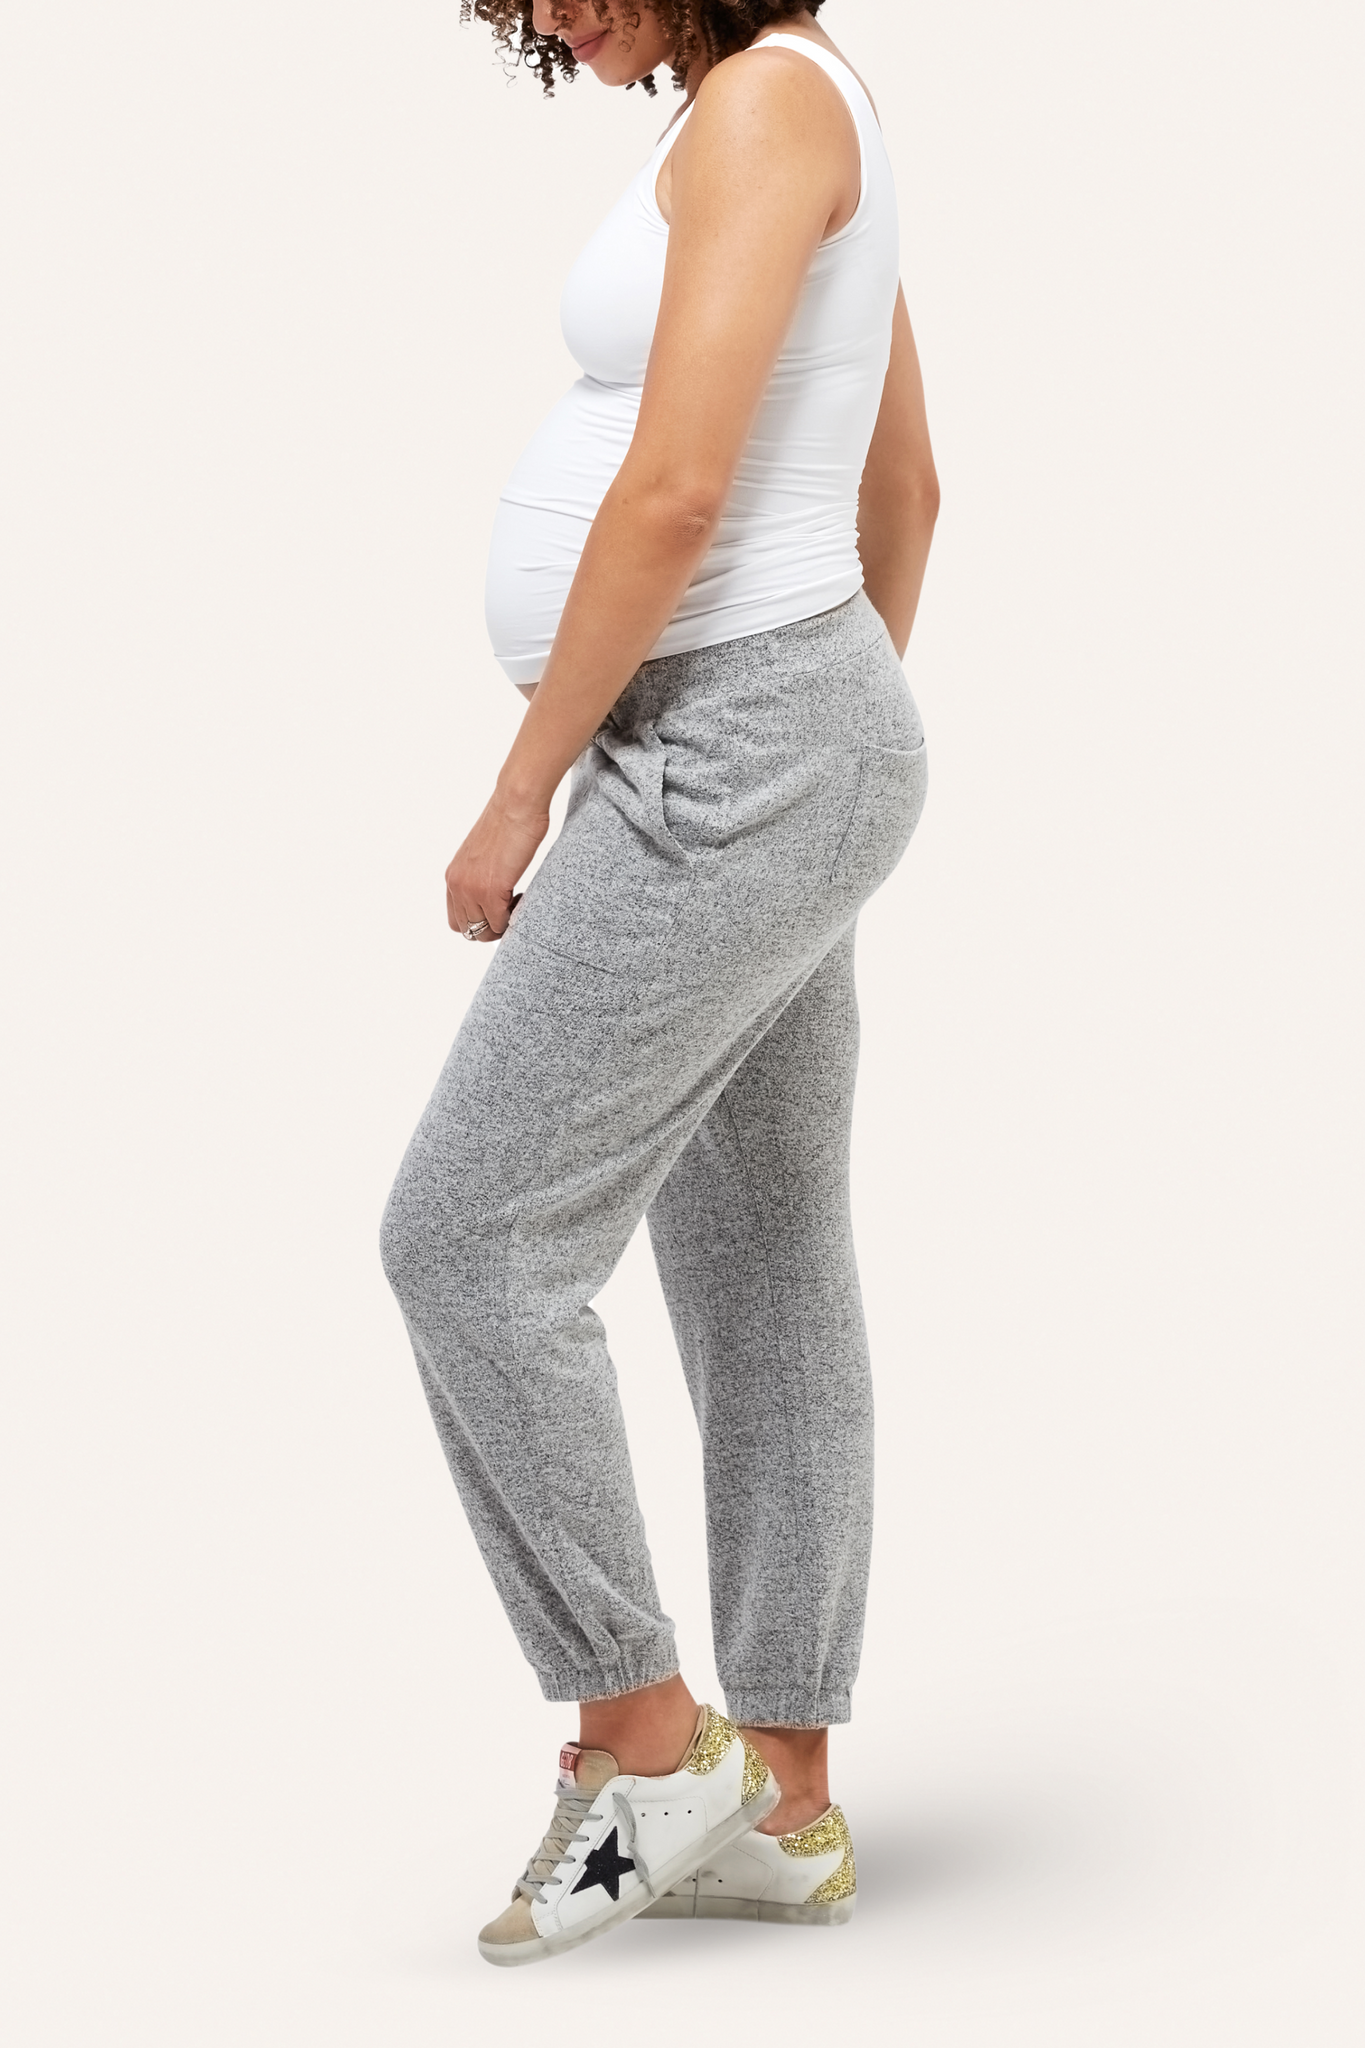 gvdentm Maternity Pants Women's Twill Jogger Pants - Casual Trendy